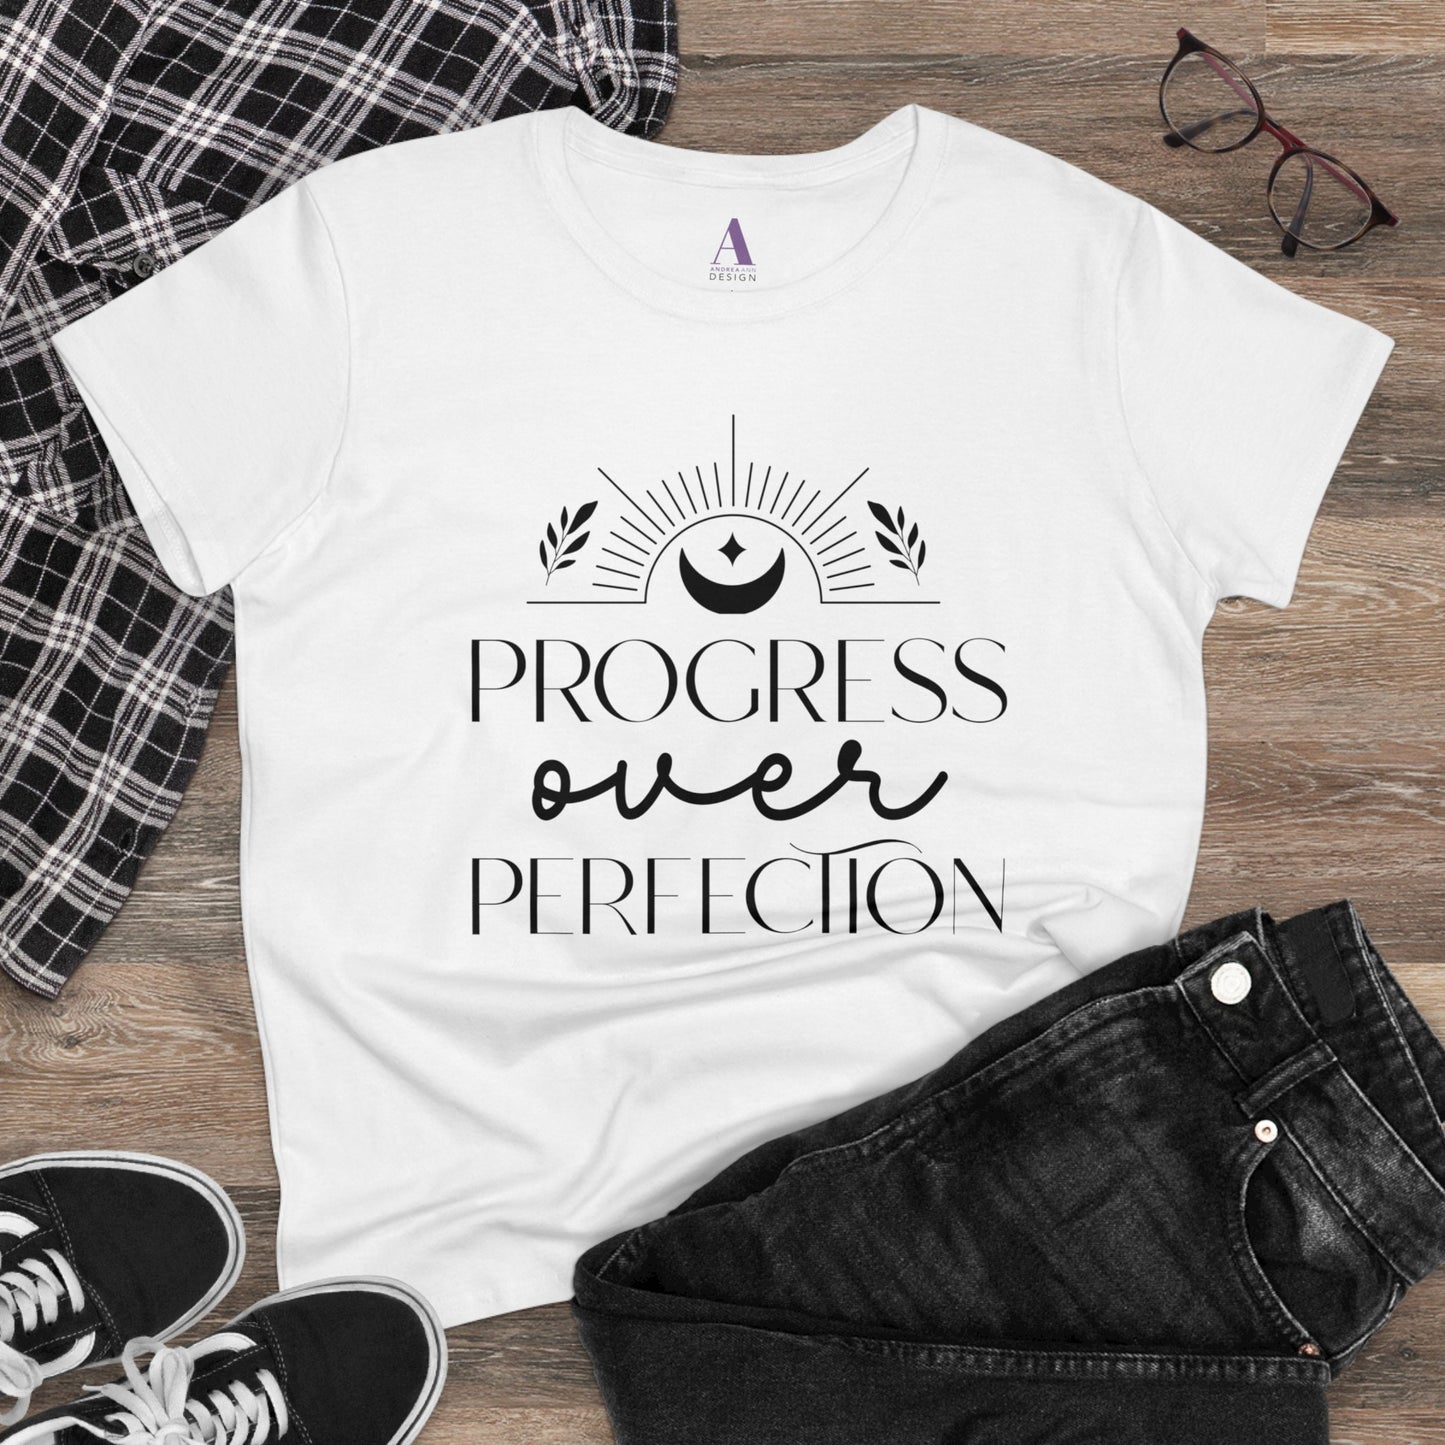 Boho Design Tee with "Progress Over Perfection" Slogan